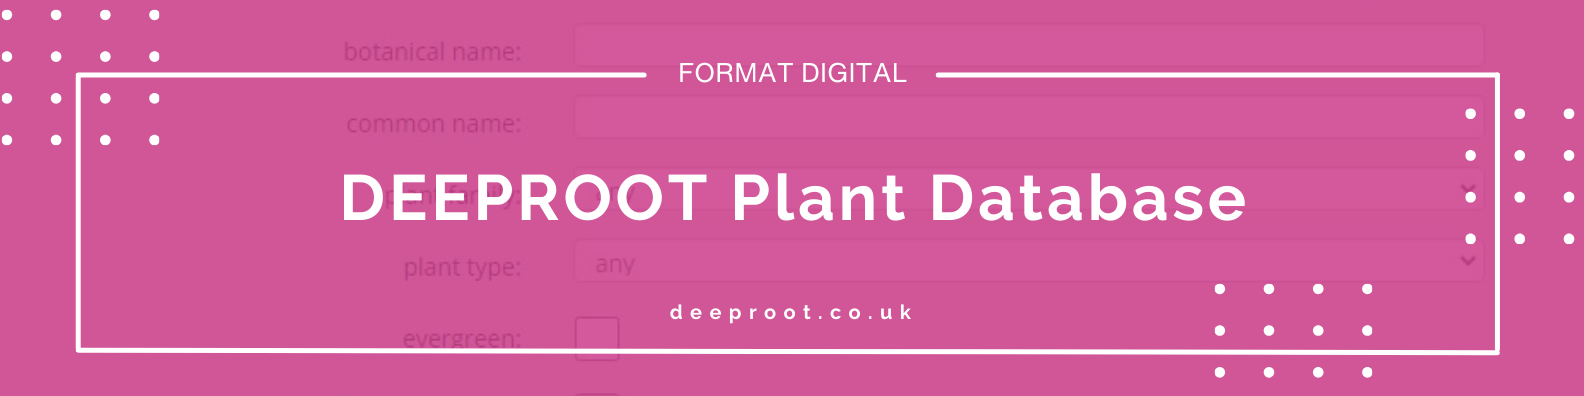 banner DEEPROOT Plant Database